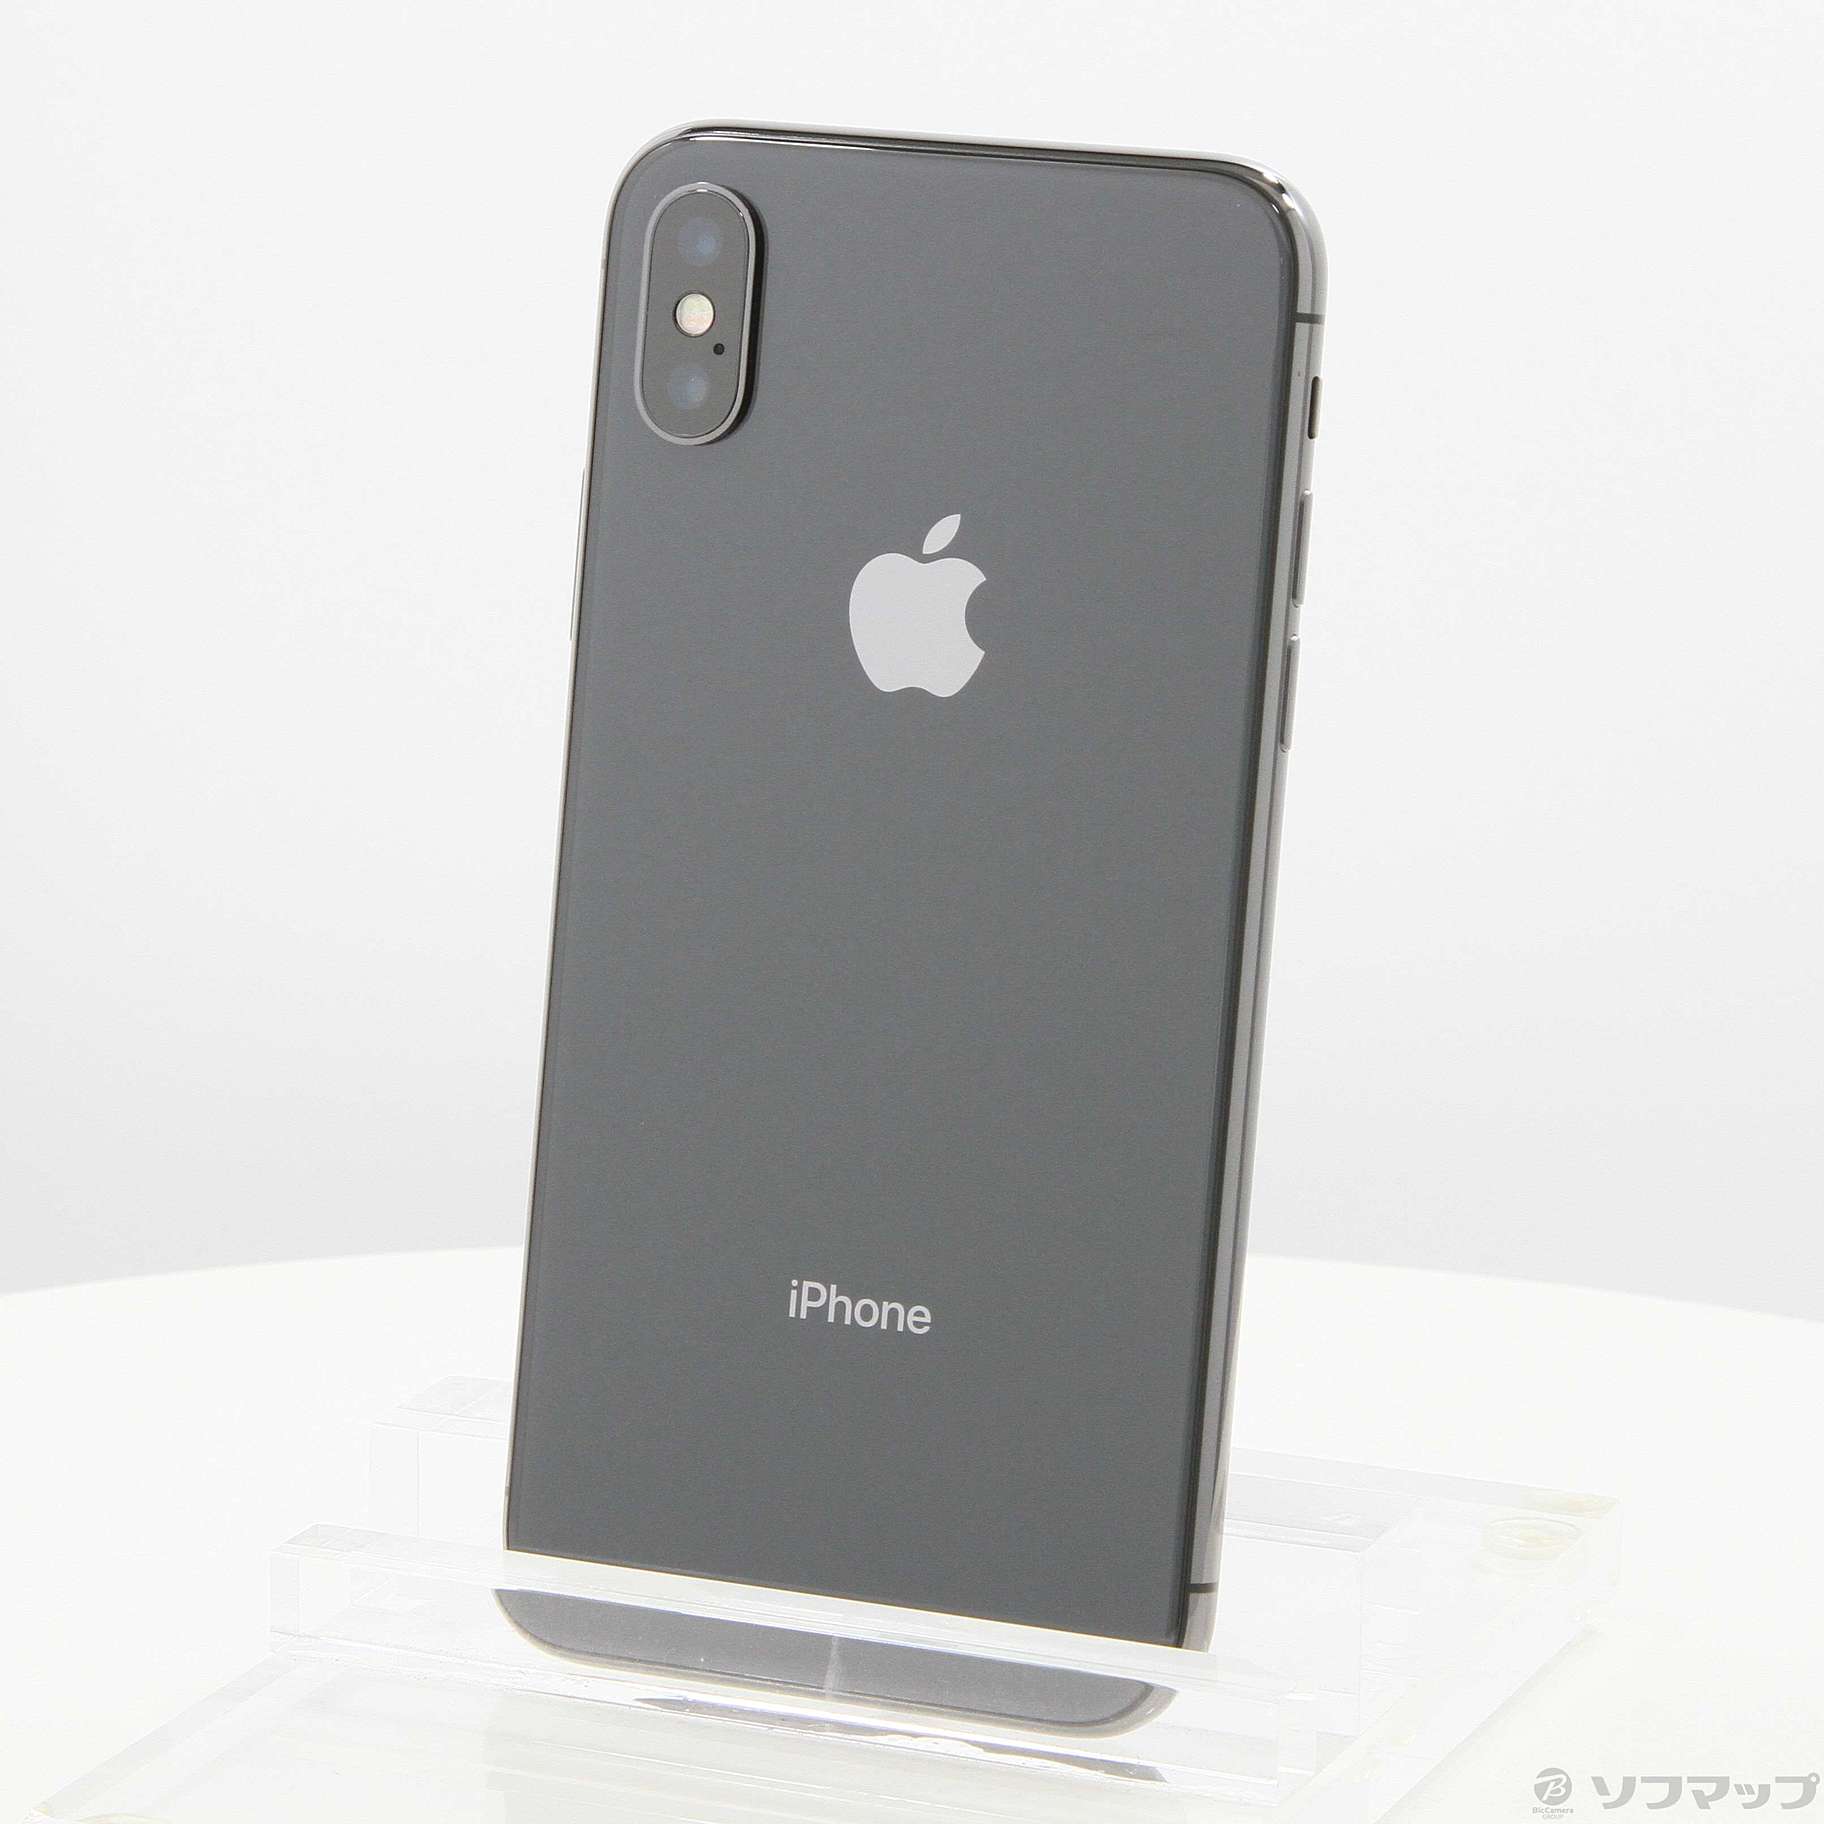 iPhone X 64GB スペースグレイ Softbank - スマートフォン本体